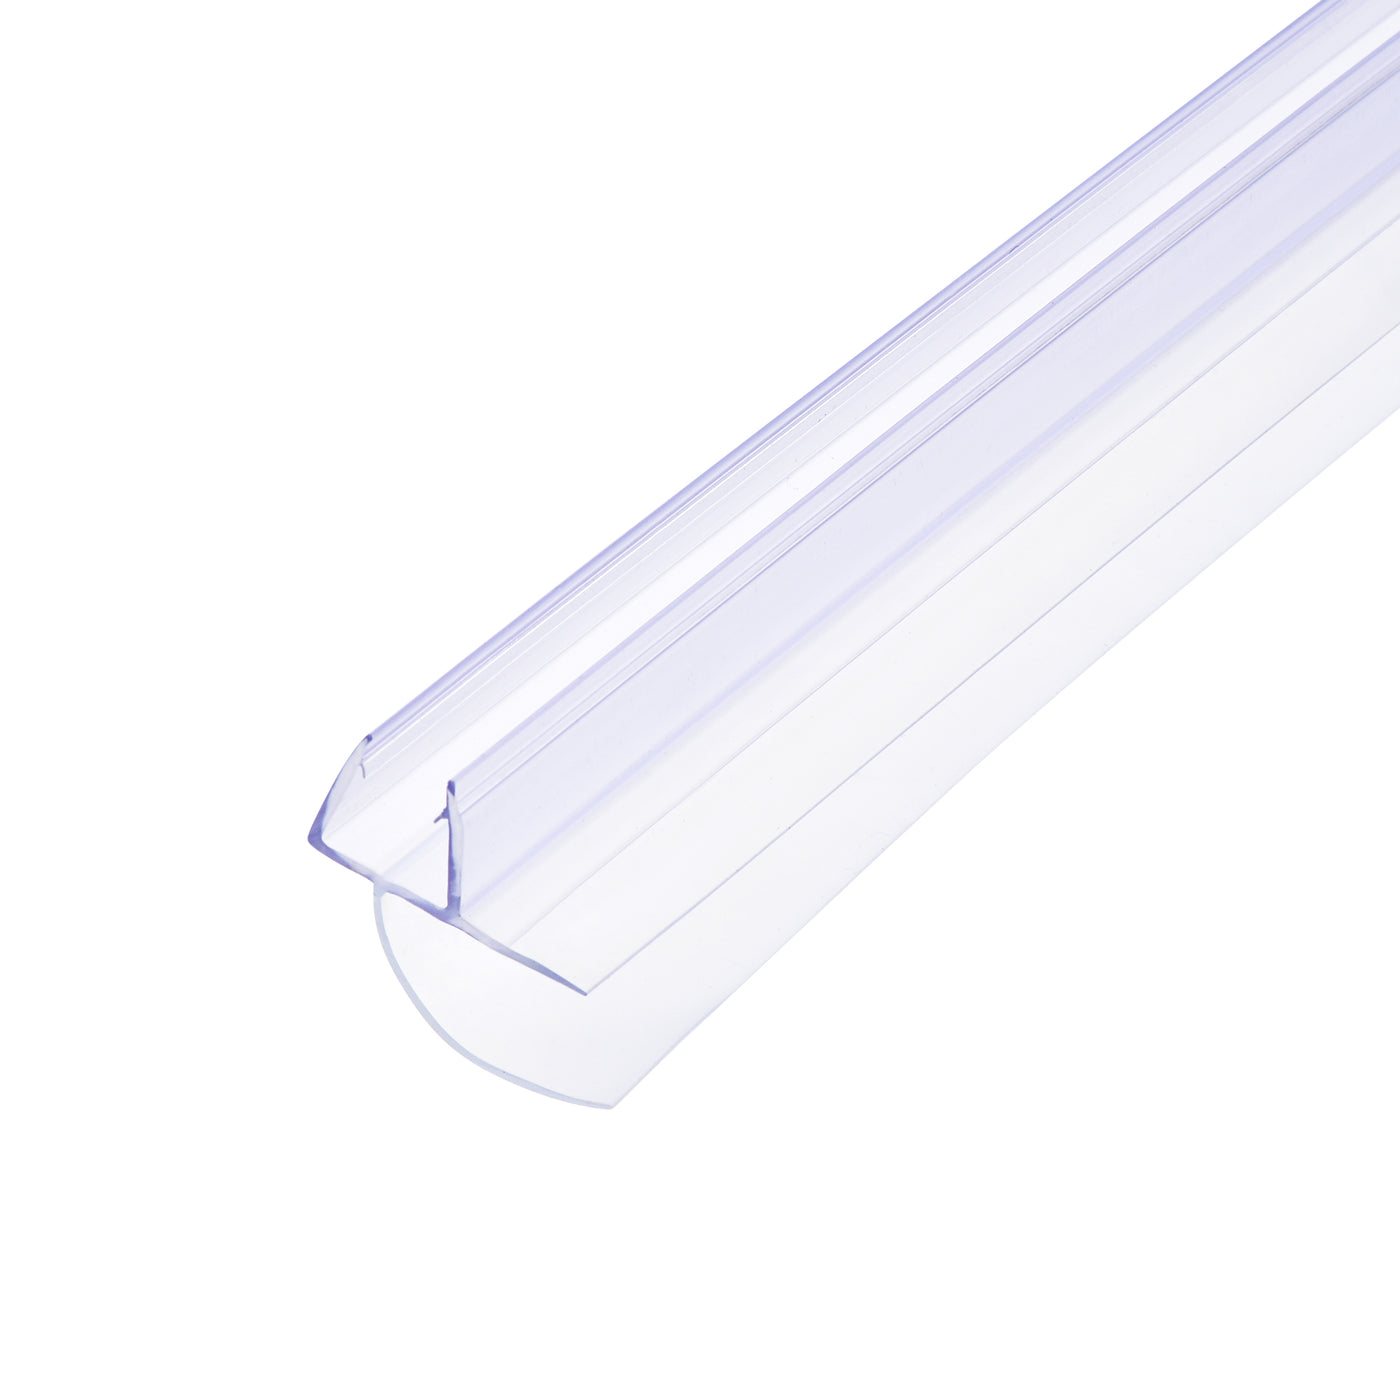 uxcell Uxcell Frameless Glass Shower Door Sweep, 27.56" Long, with 1"(25mm) Drip Rail - 3/8"(10mm) Glass, H-Type Door Bottom Side Seal Strip